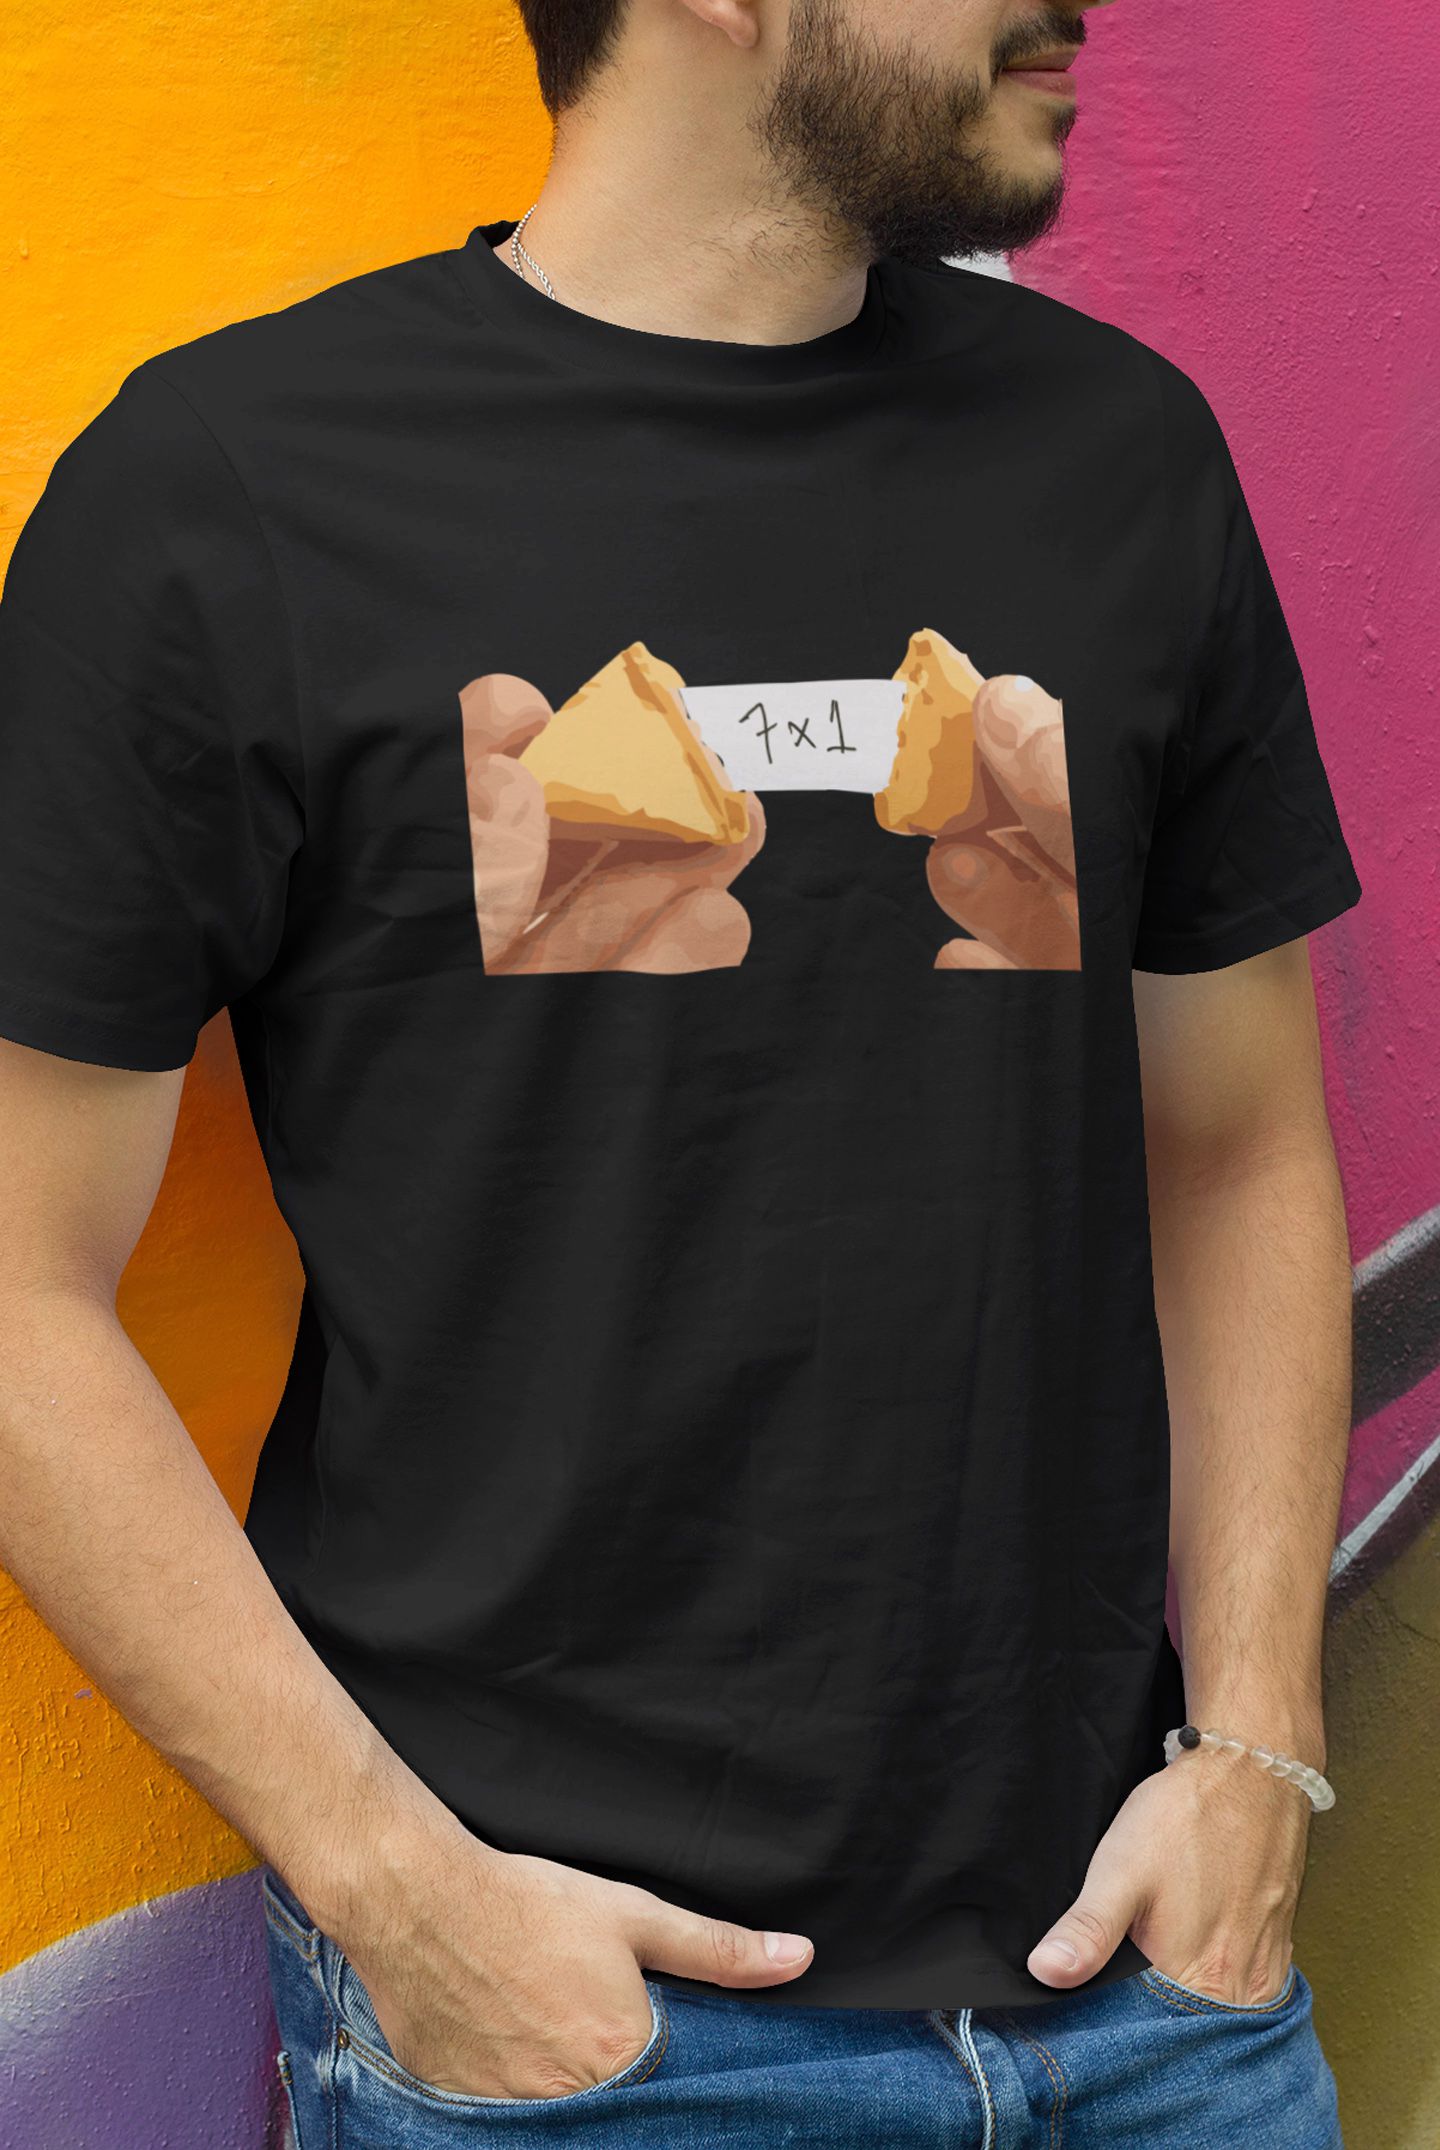 Camiseta Masculina Estampa Batatinha Frita 123